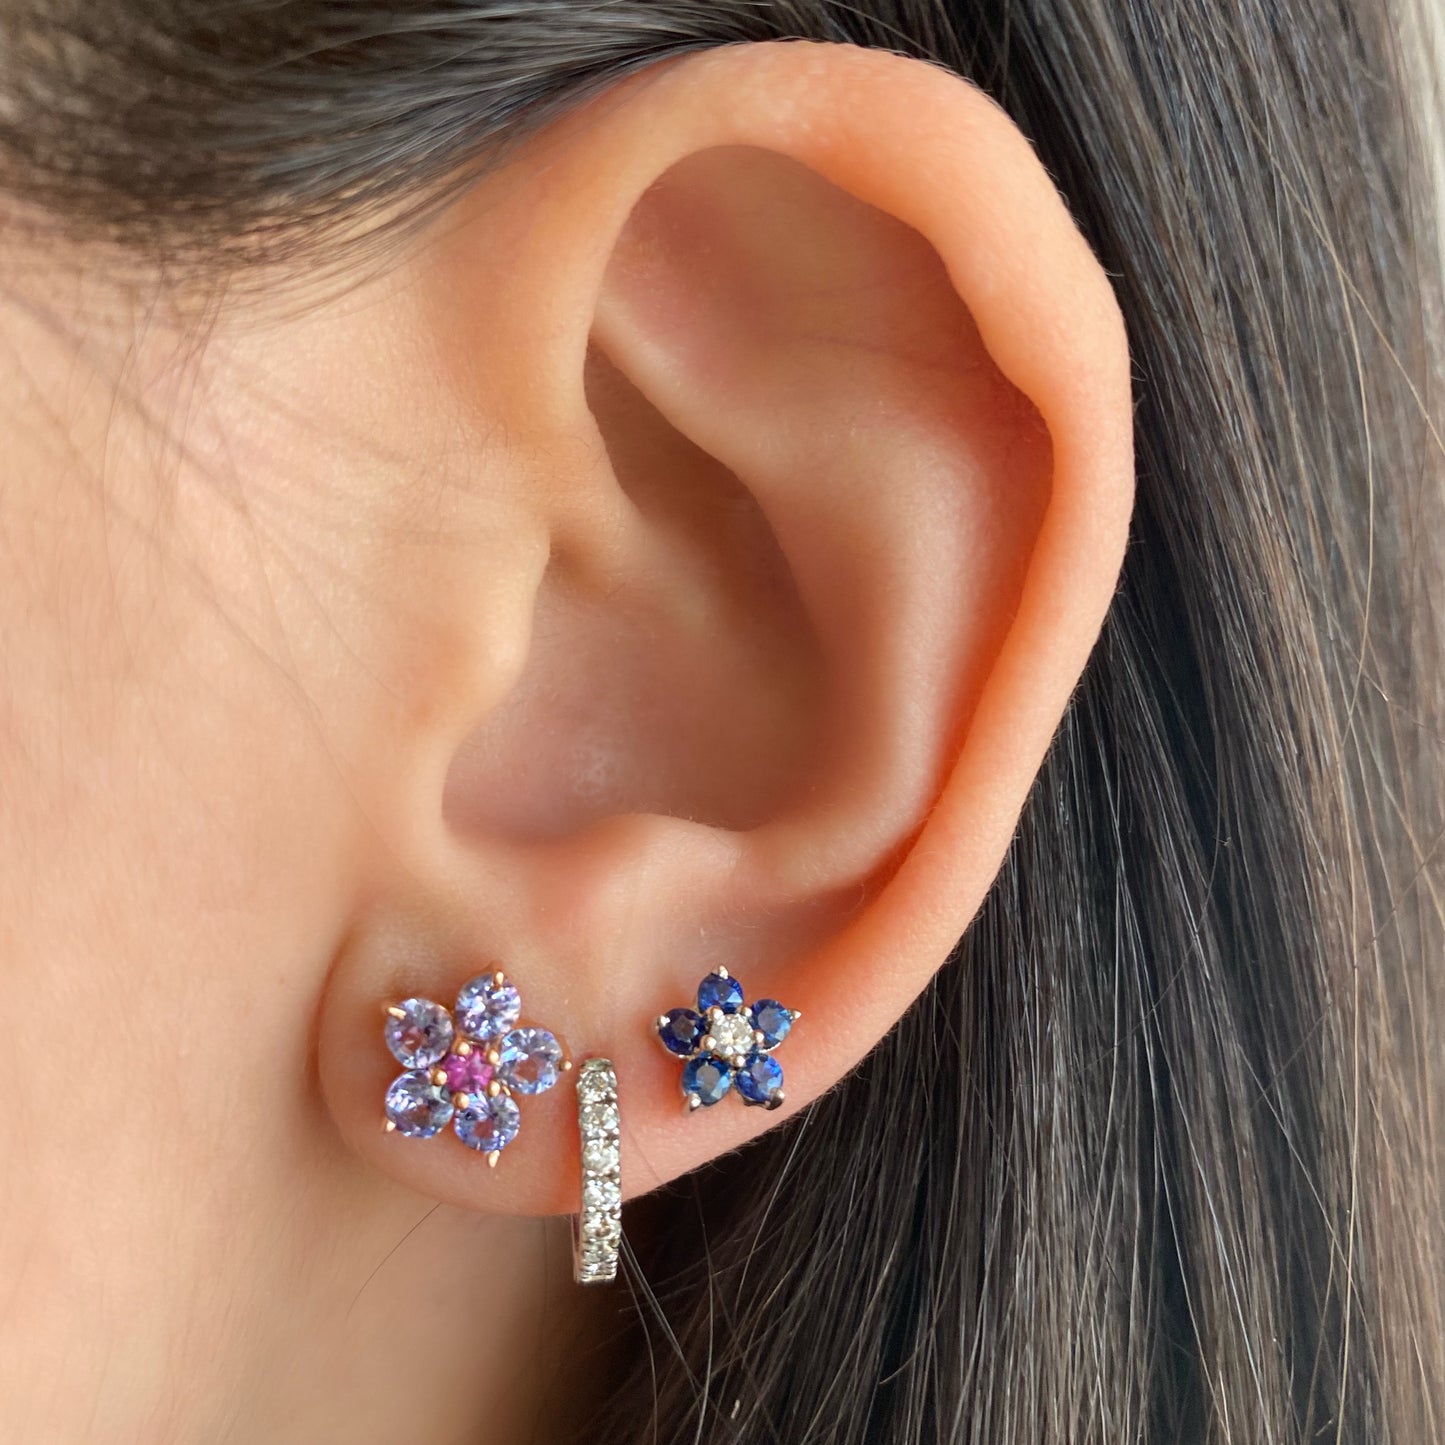 Large Flower Earrings